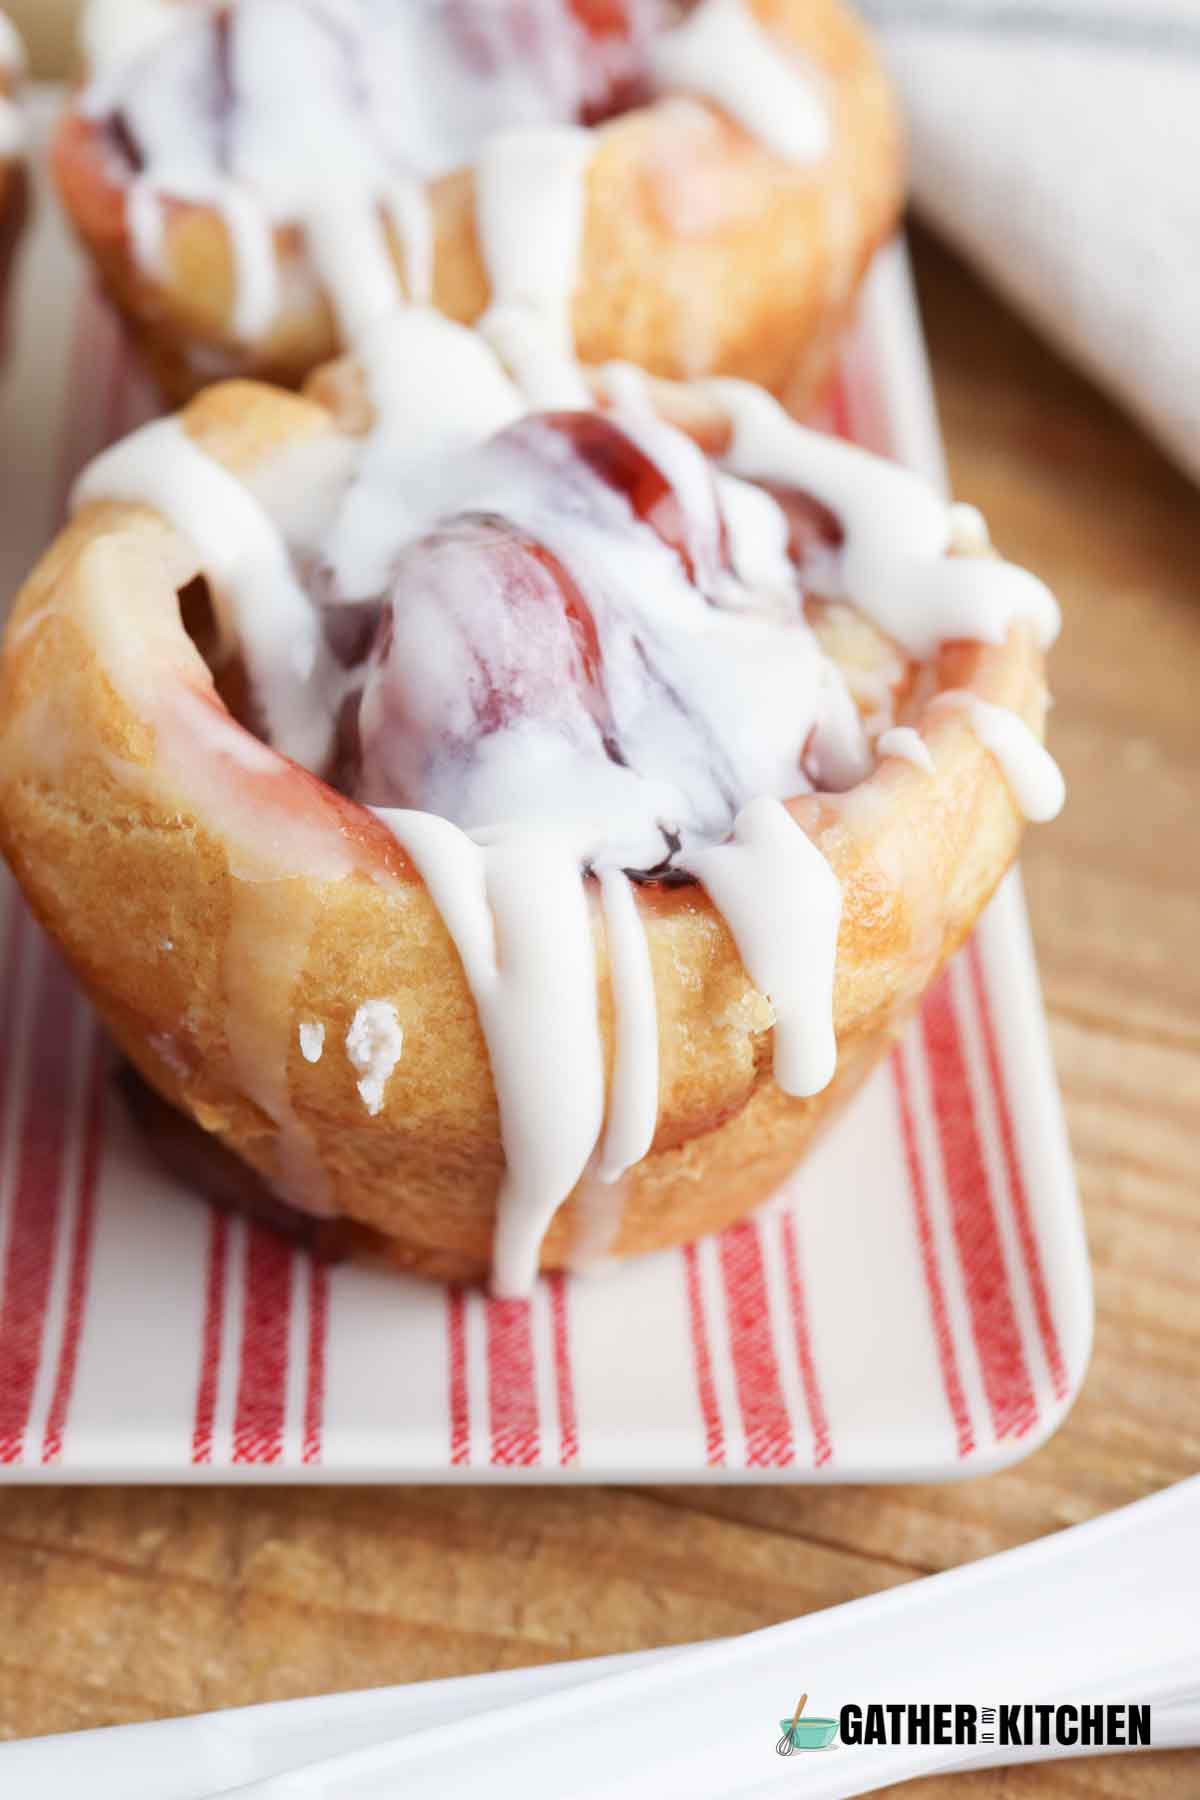 Side view of glazed cherry Danish muffin.